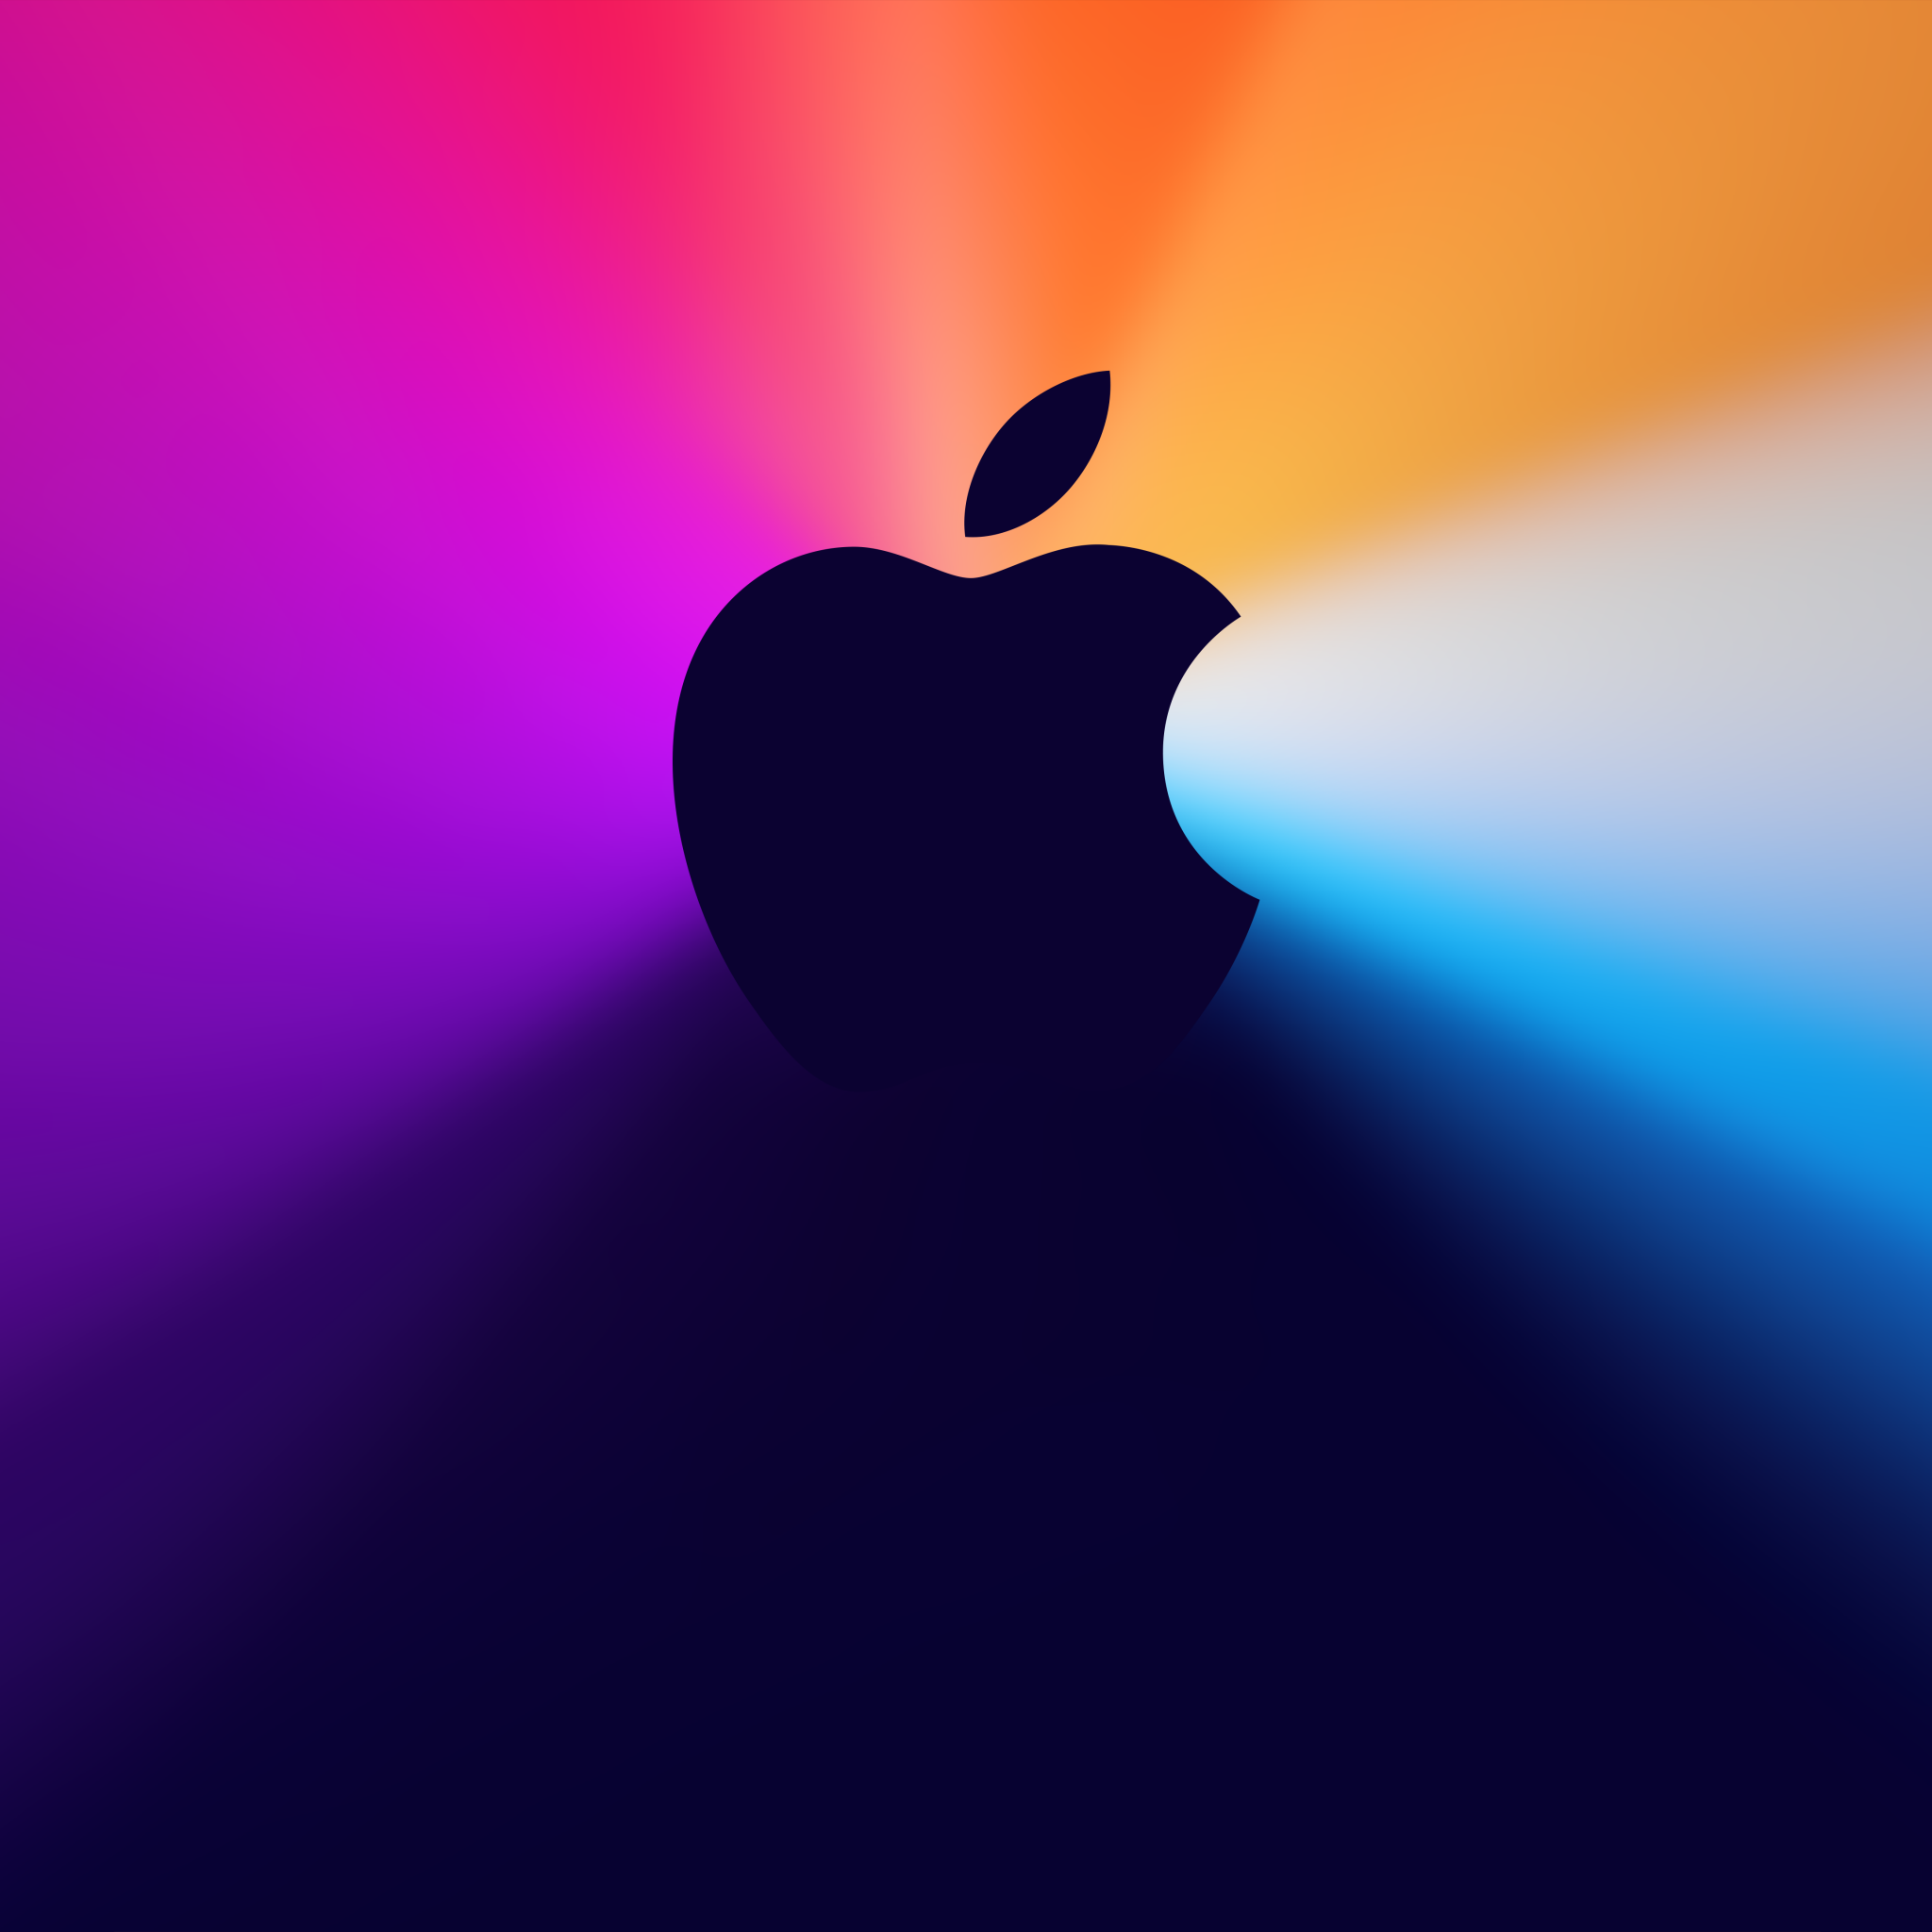 apple mobile logo png